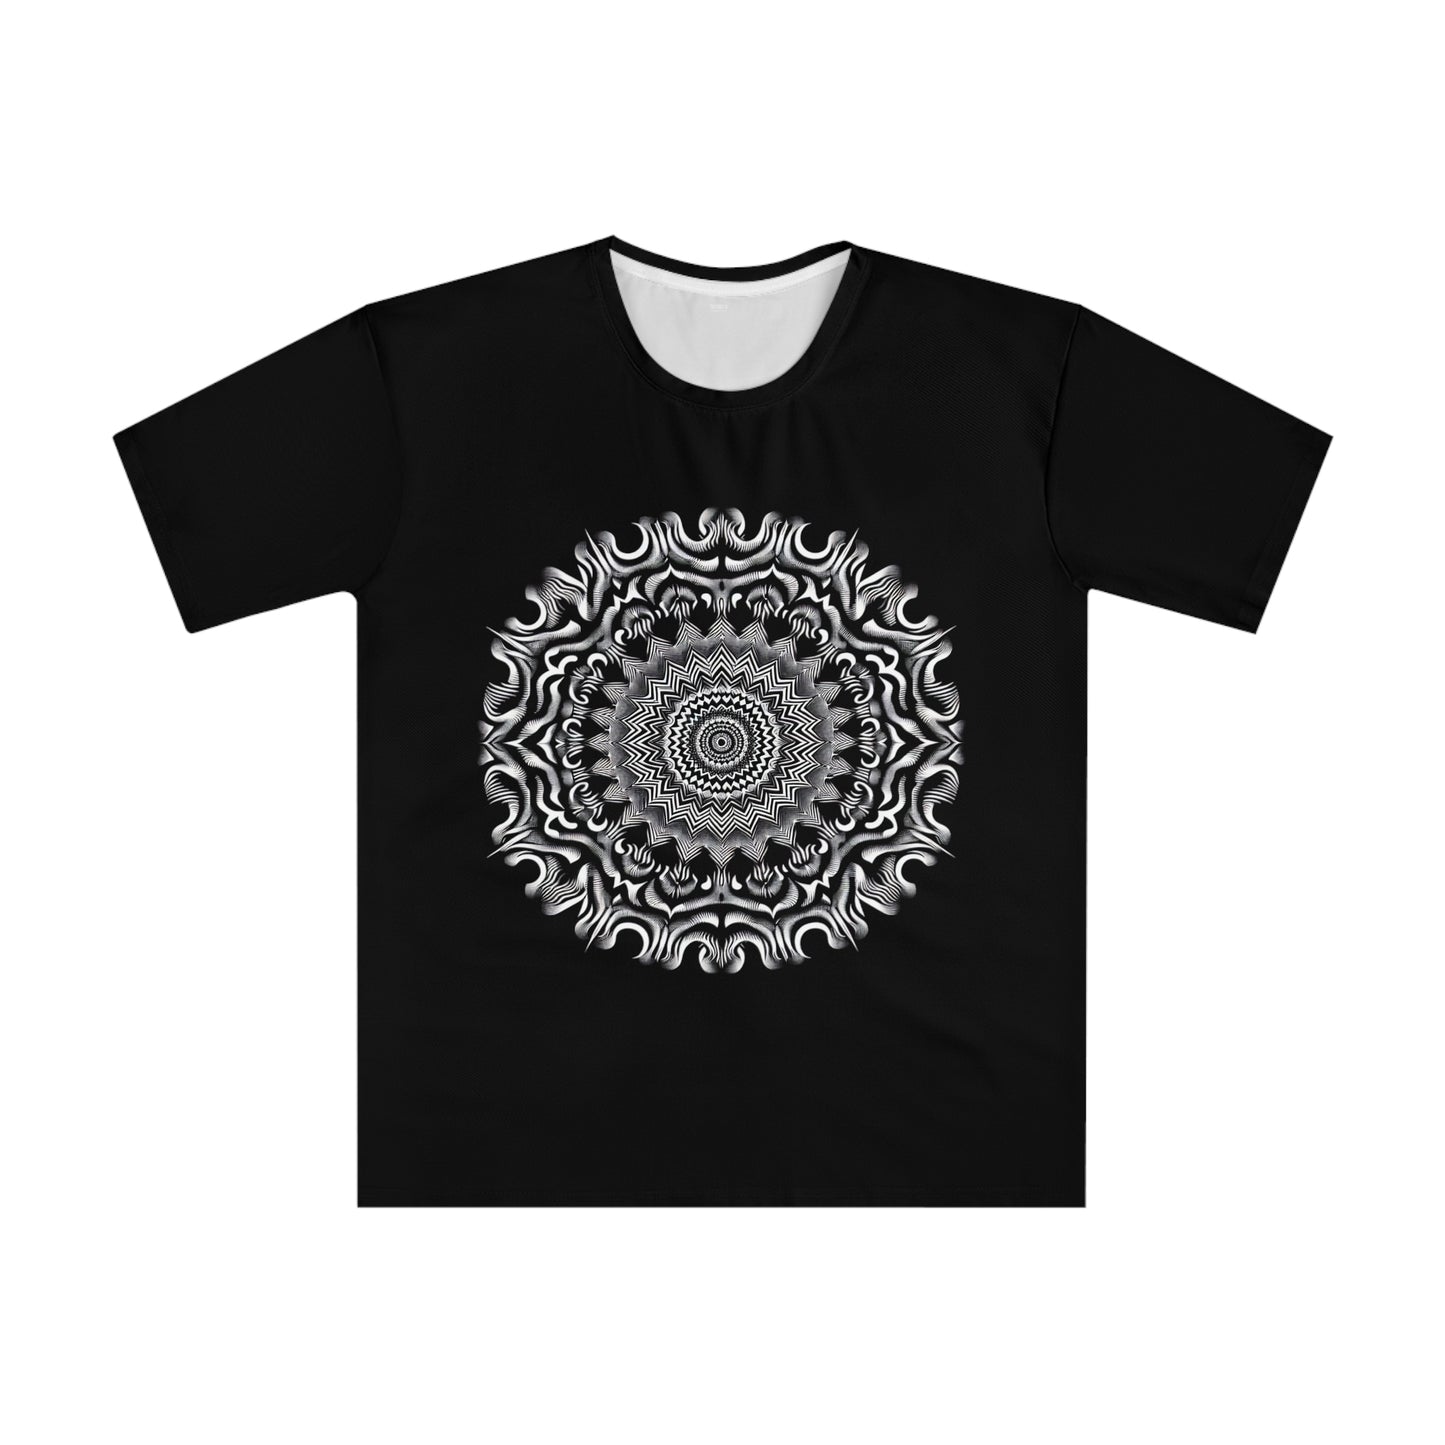 The Rhythmic Illusions Men's T-shirt